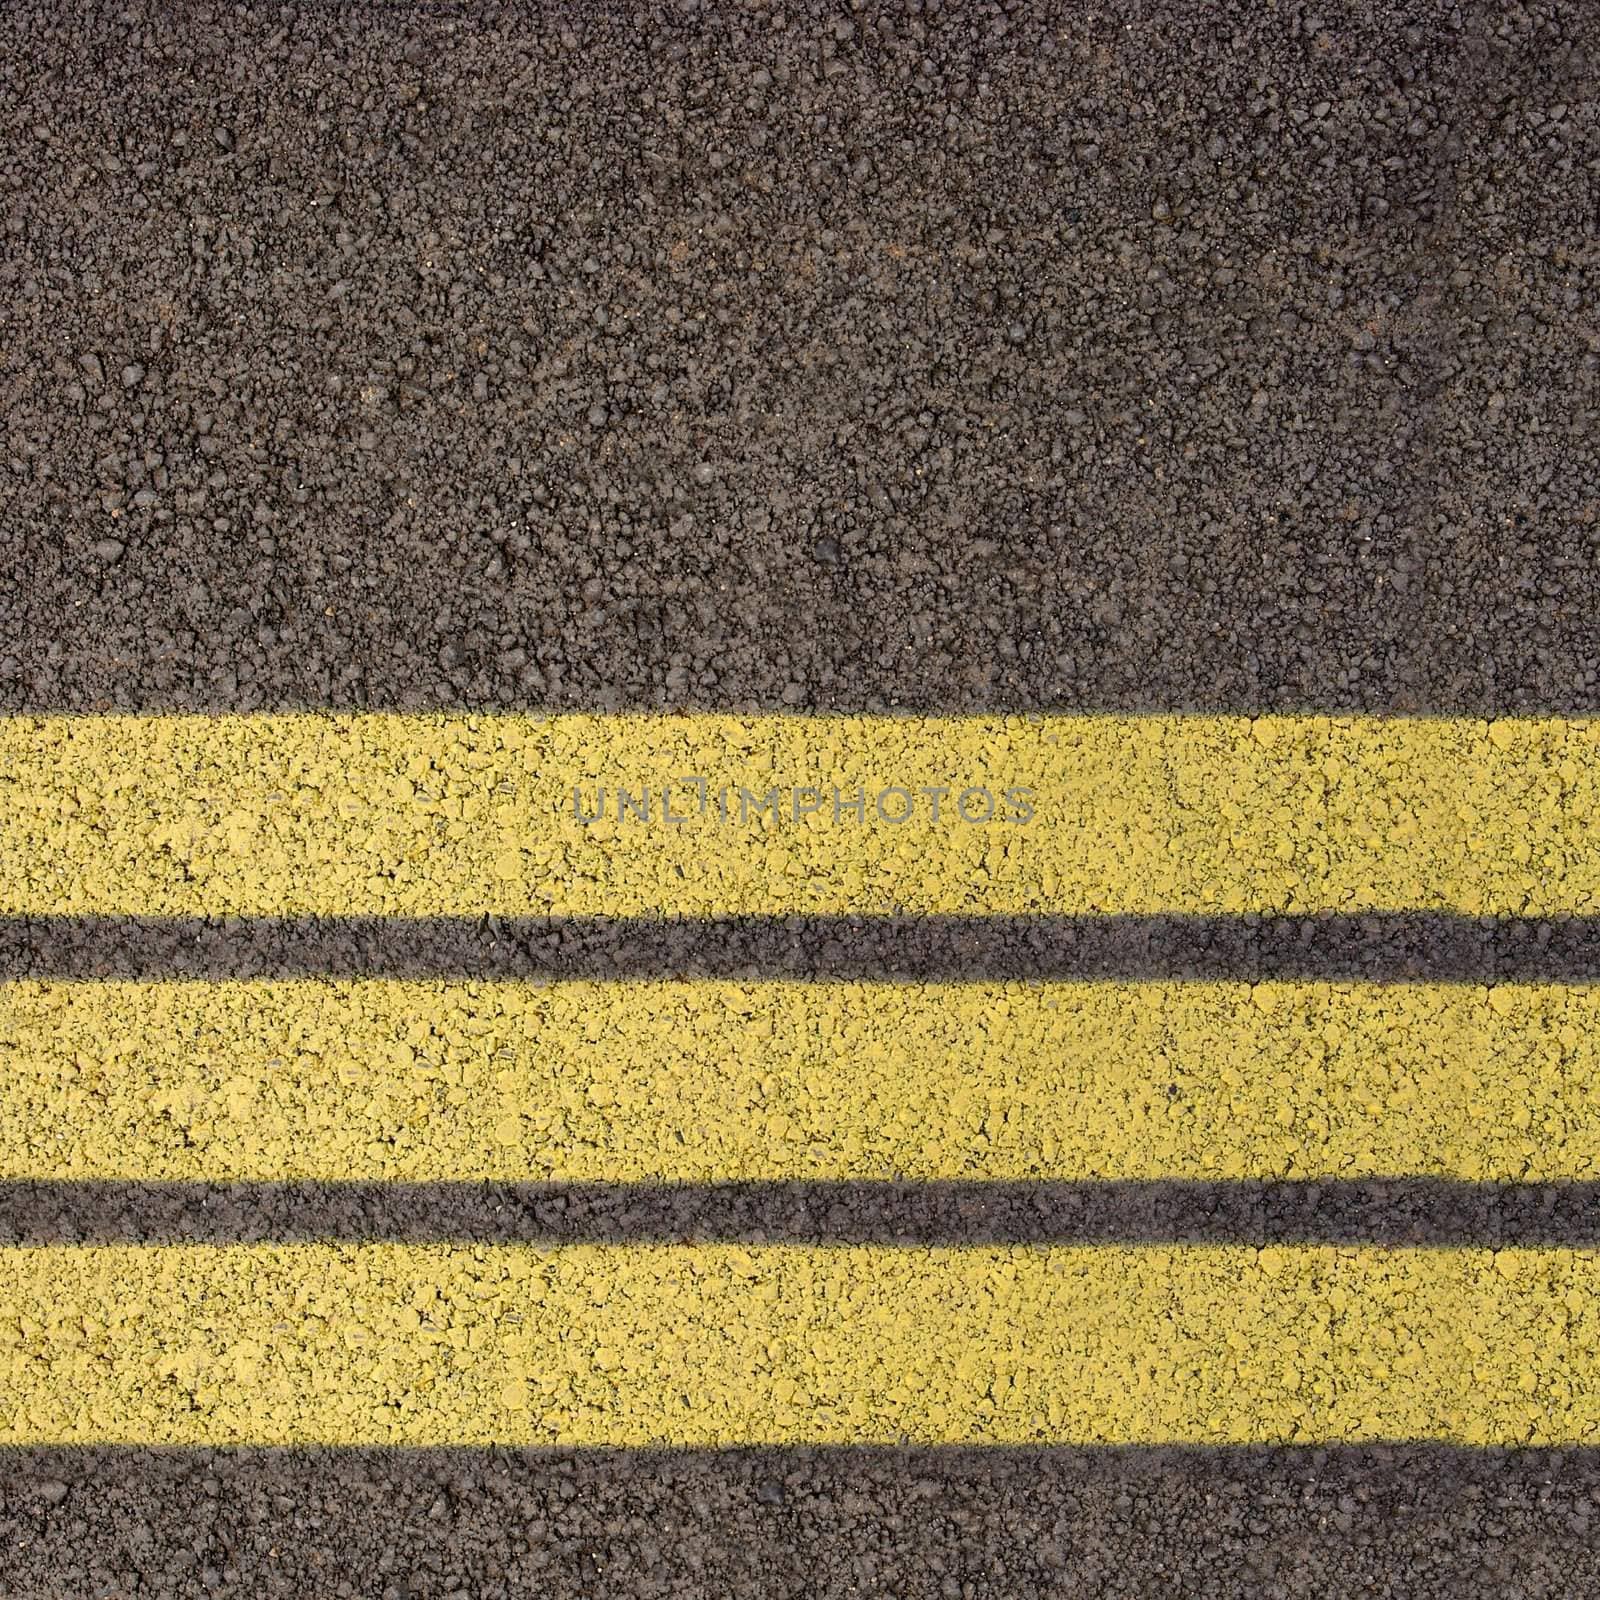 Asphalt texture with three yellow lines